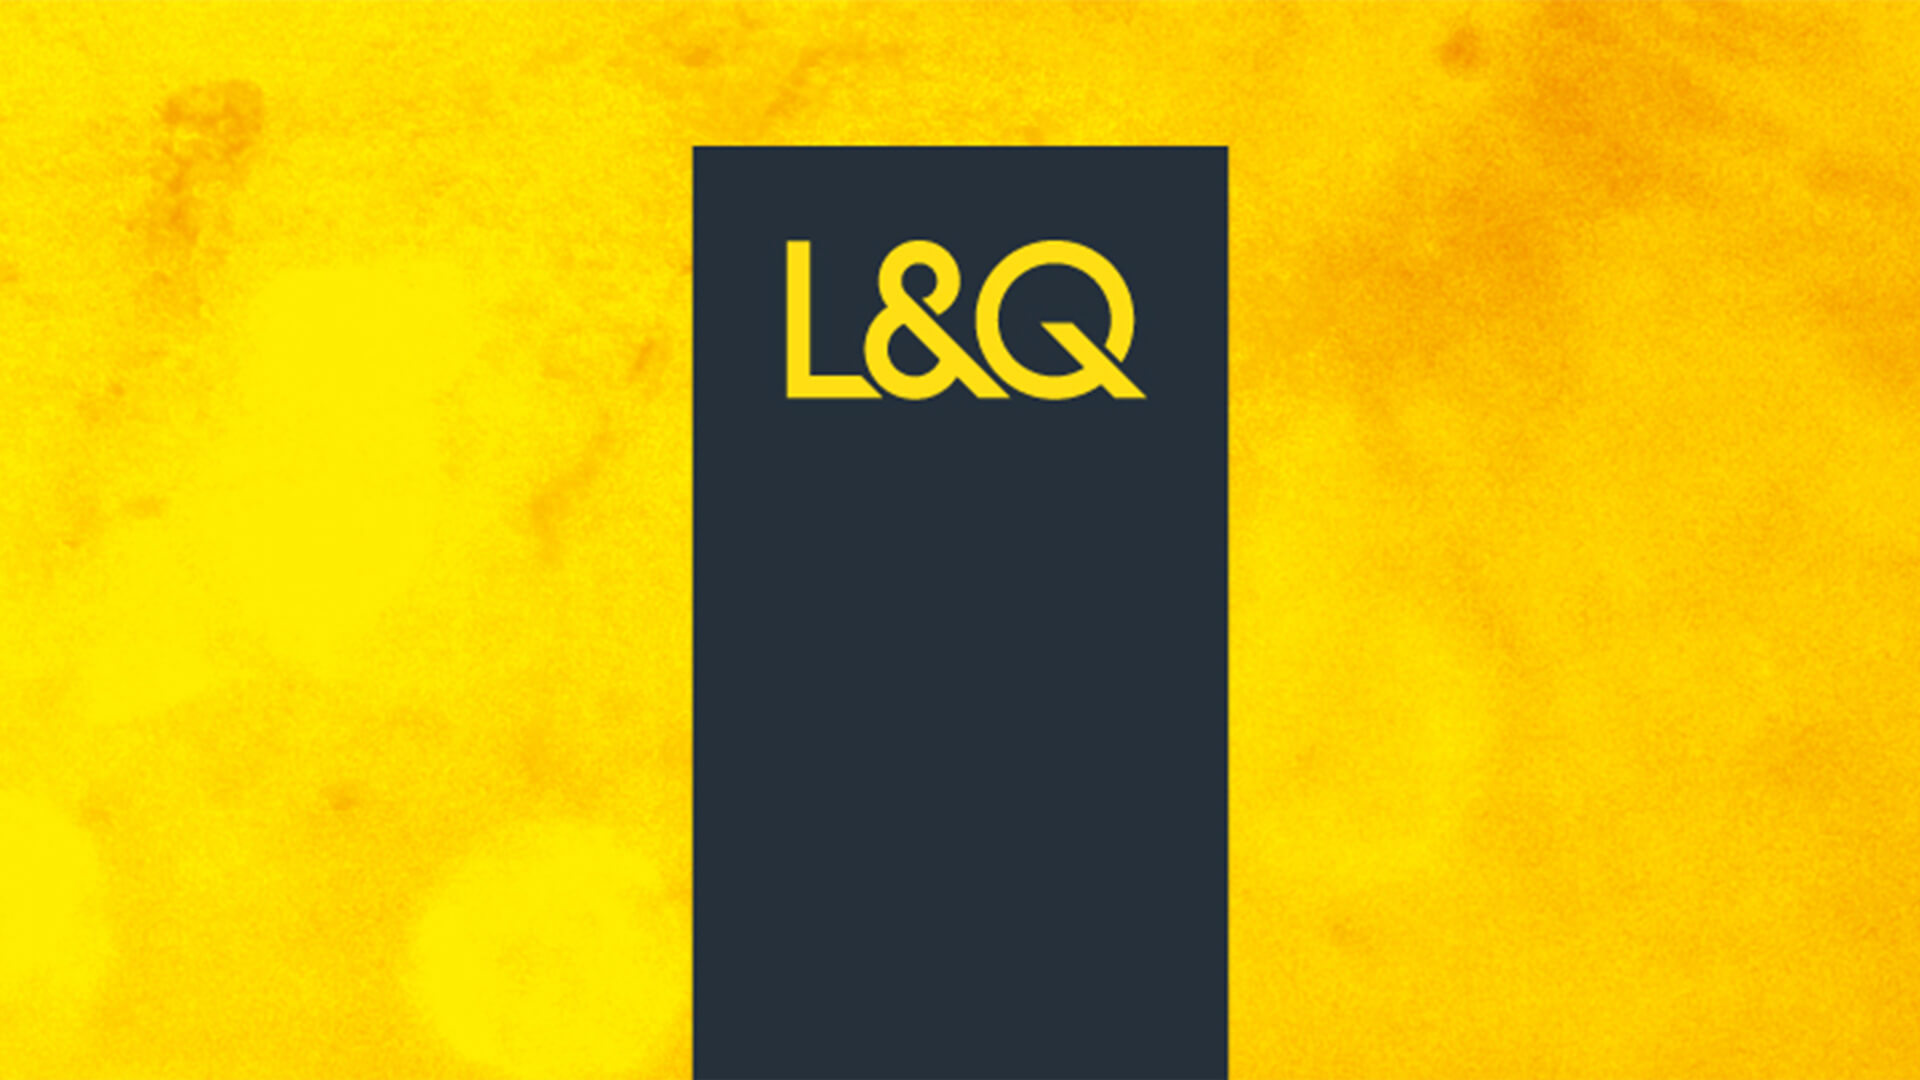 The L&Q logo